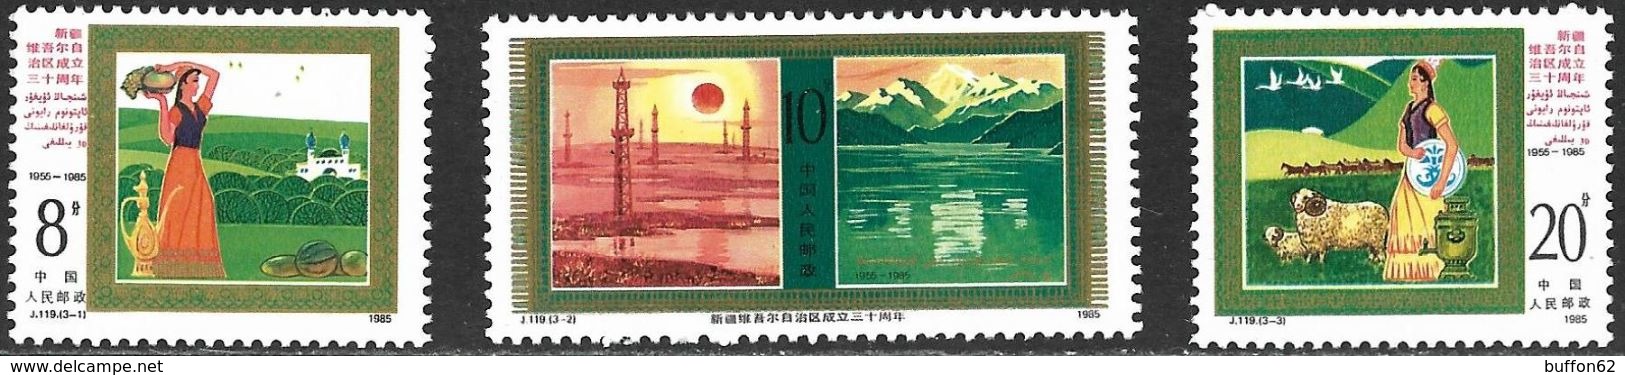 Chine / China (1985) - Champ Pétrolifère / Oil Field. Oasis Pâturage, Moutons. Région Xinjiang Uygur. MNH. - Erdöl